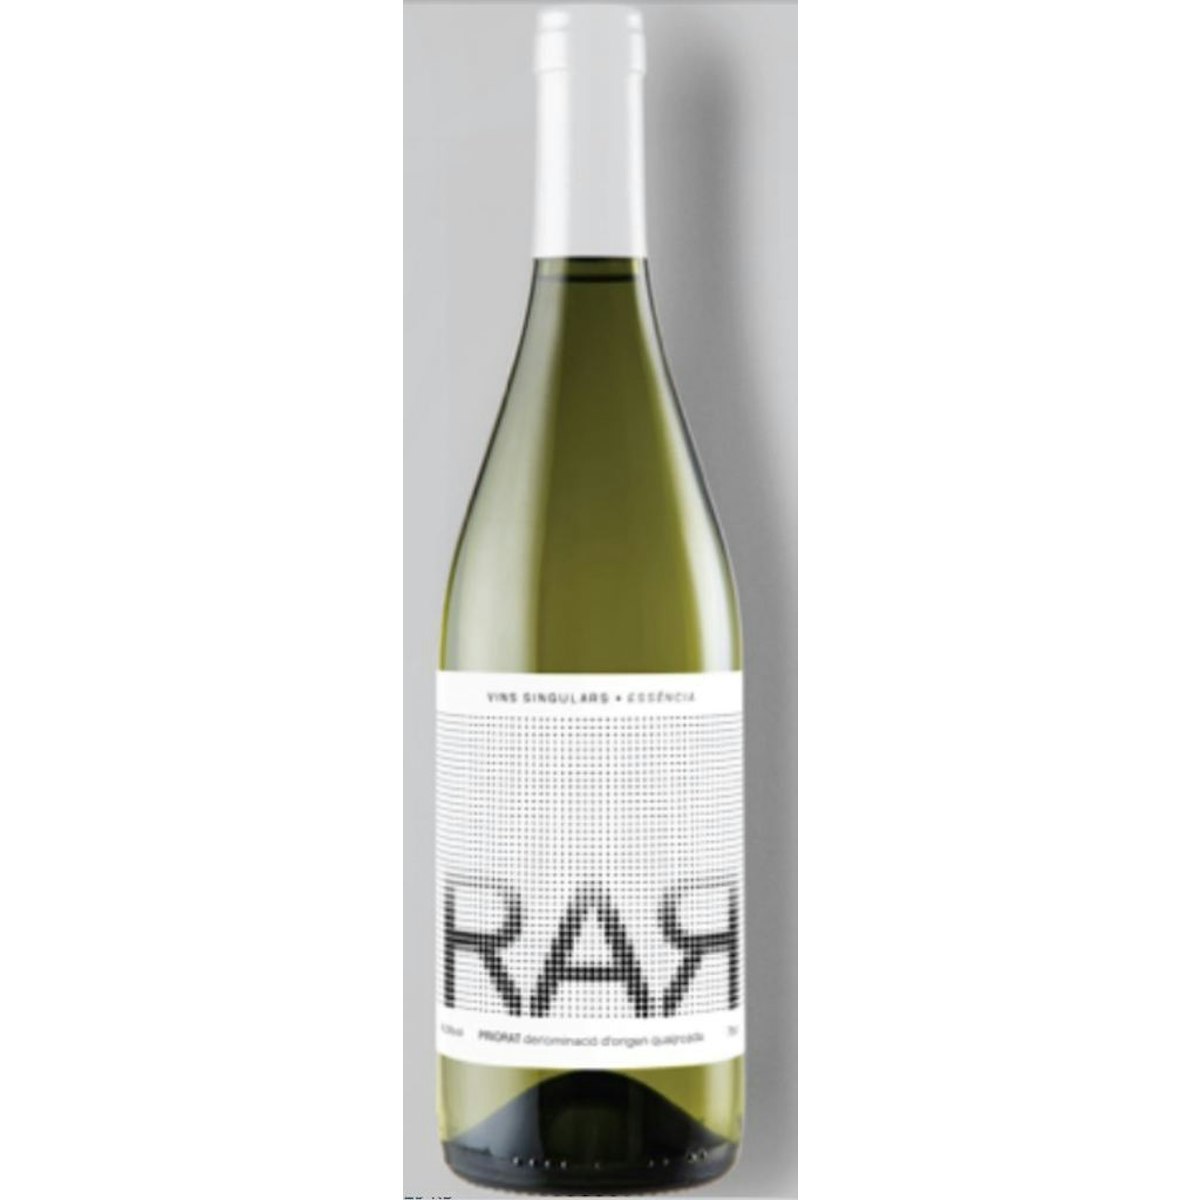 RAR Vins Singulars  Priorat Blanc, Ruby Vintage, 2020